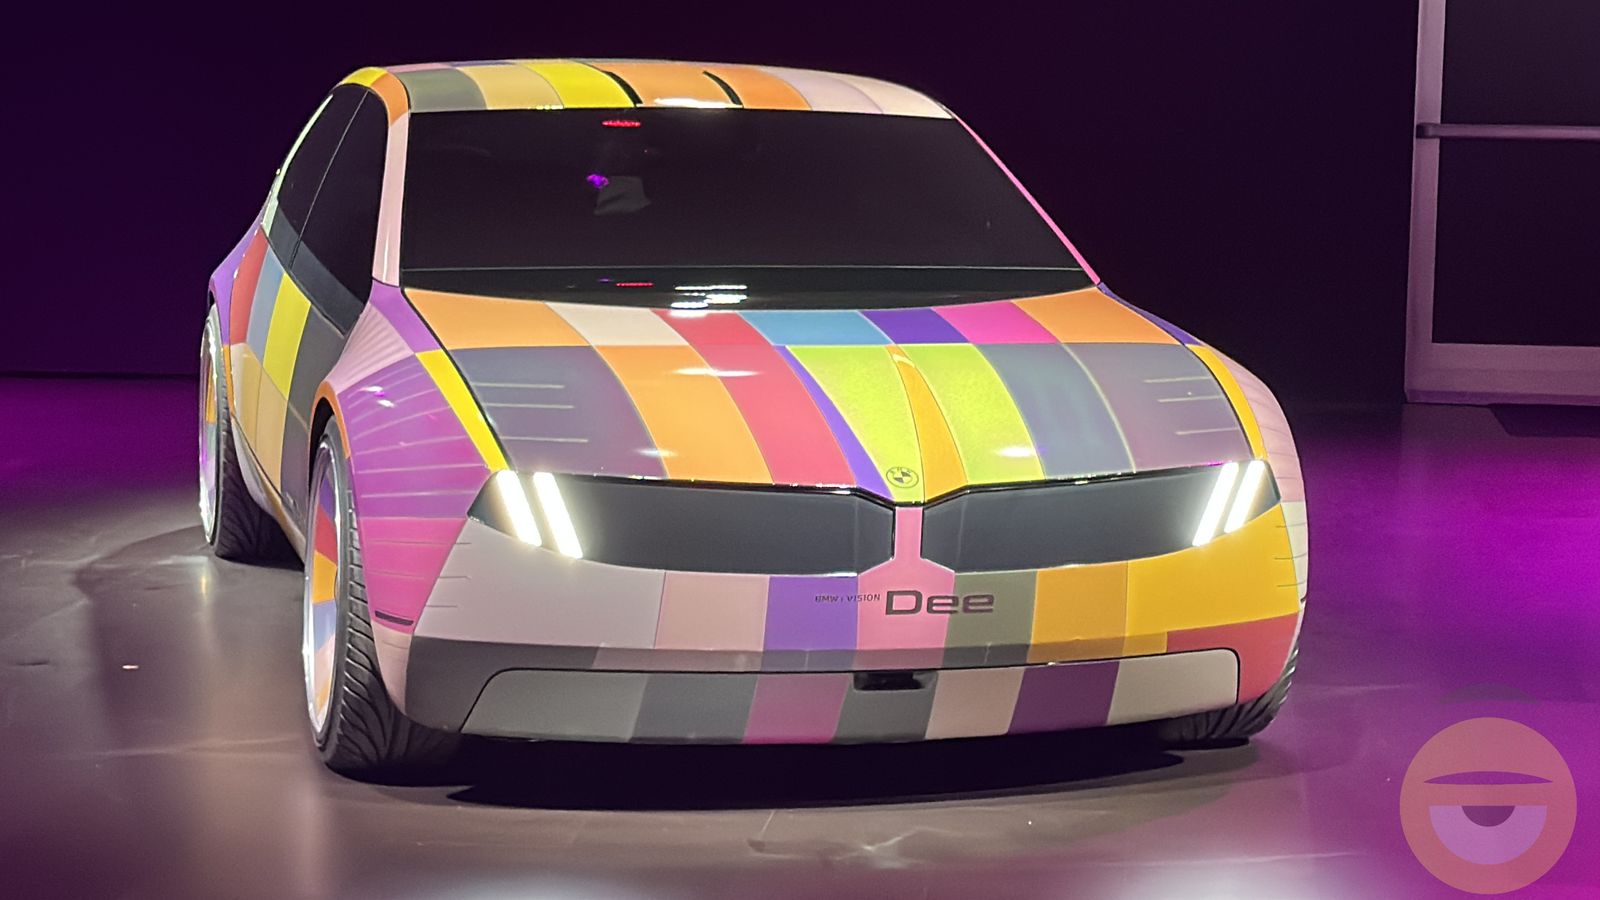 H BMW παρουσίασε στη CES το i Vision Dee, το αυτοκίνητο που αλλάζει χρώματα